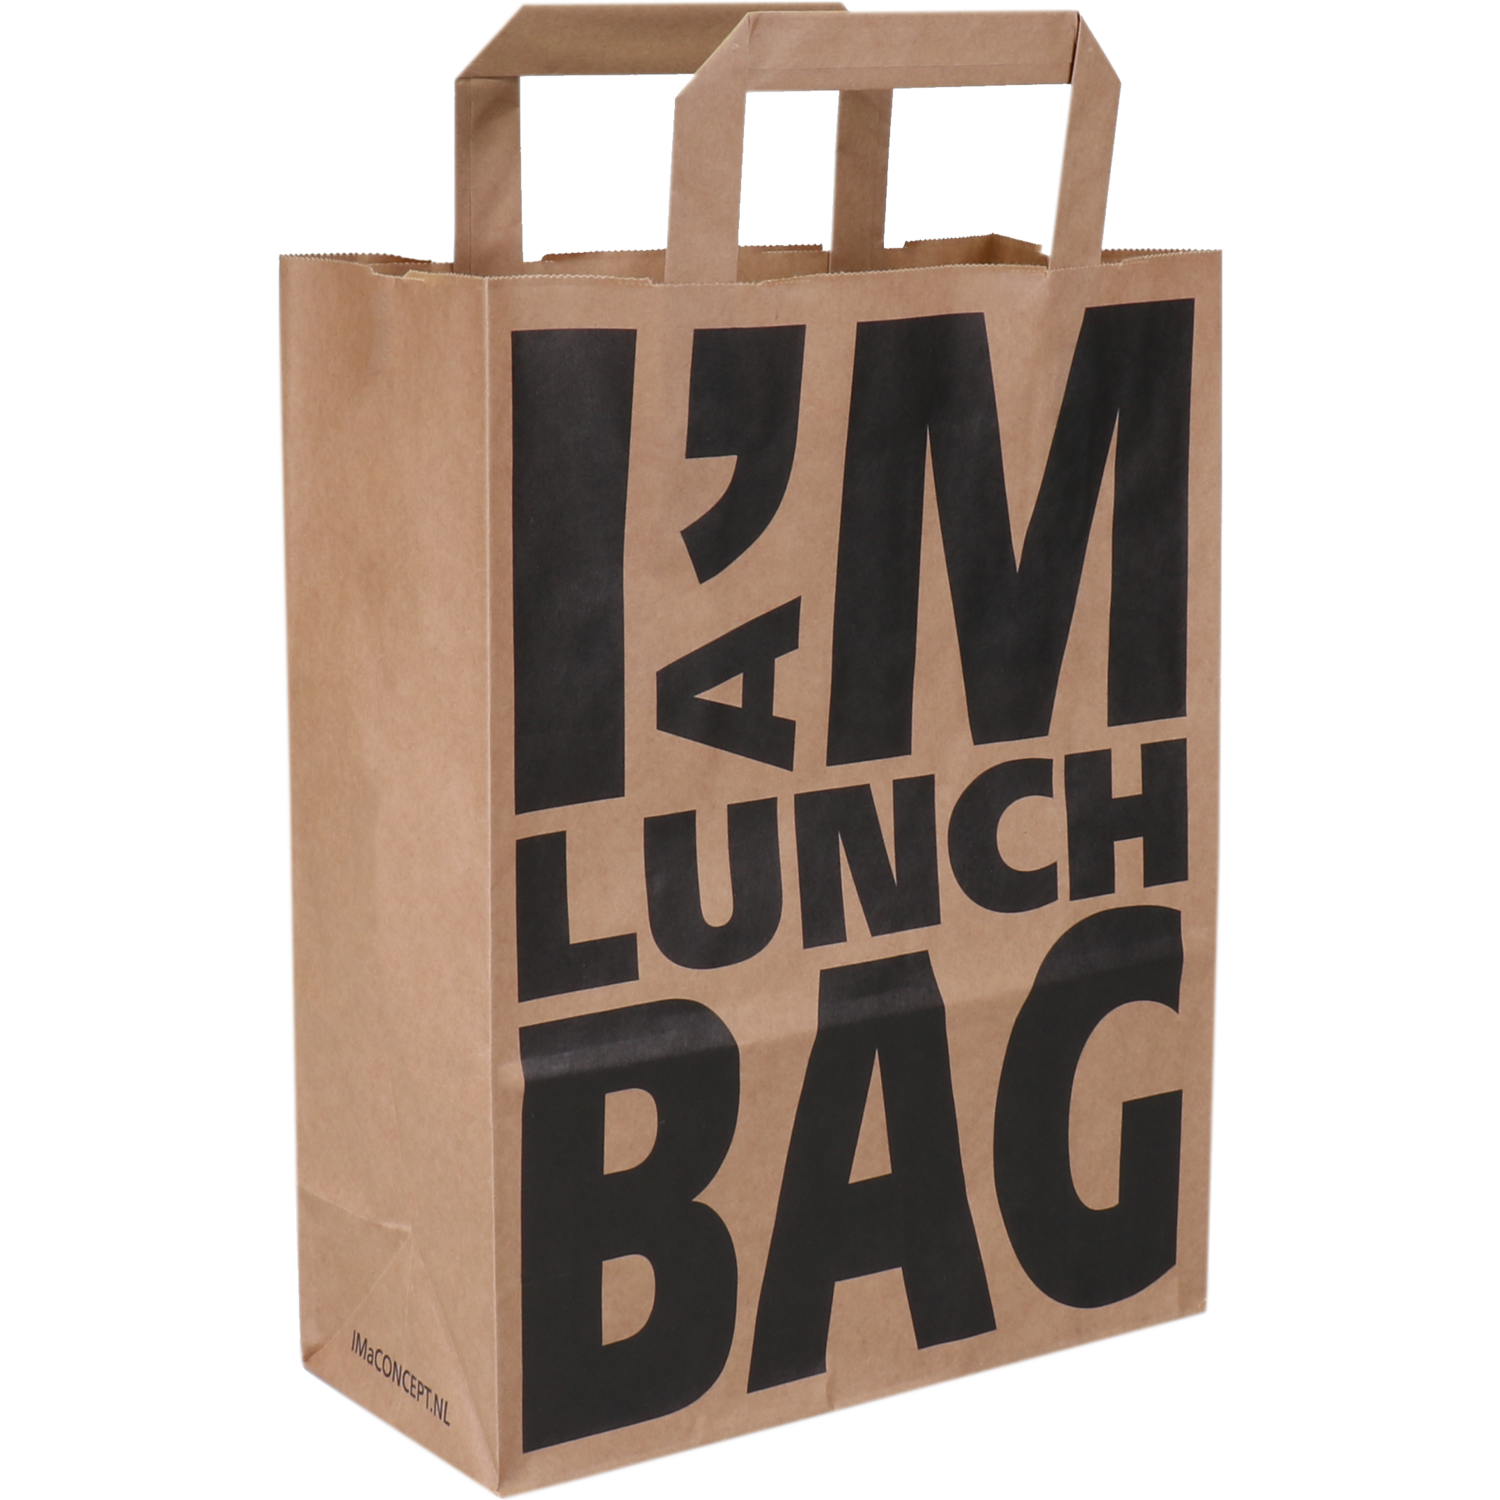 I'M Concept Bag, I'M a LUNCH bag, Paper, flat paper handles, 22xSide fold 10x28cm, carrier bag, brown  1